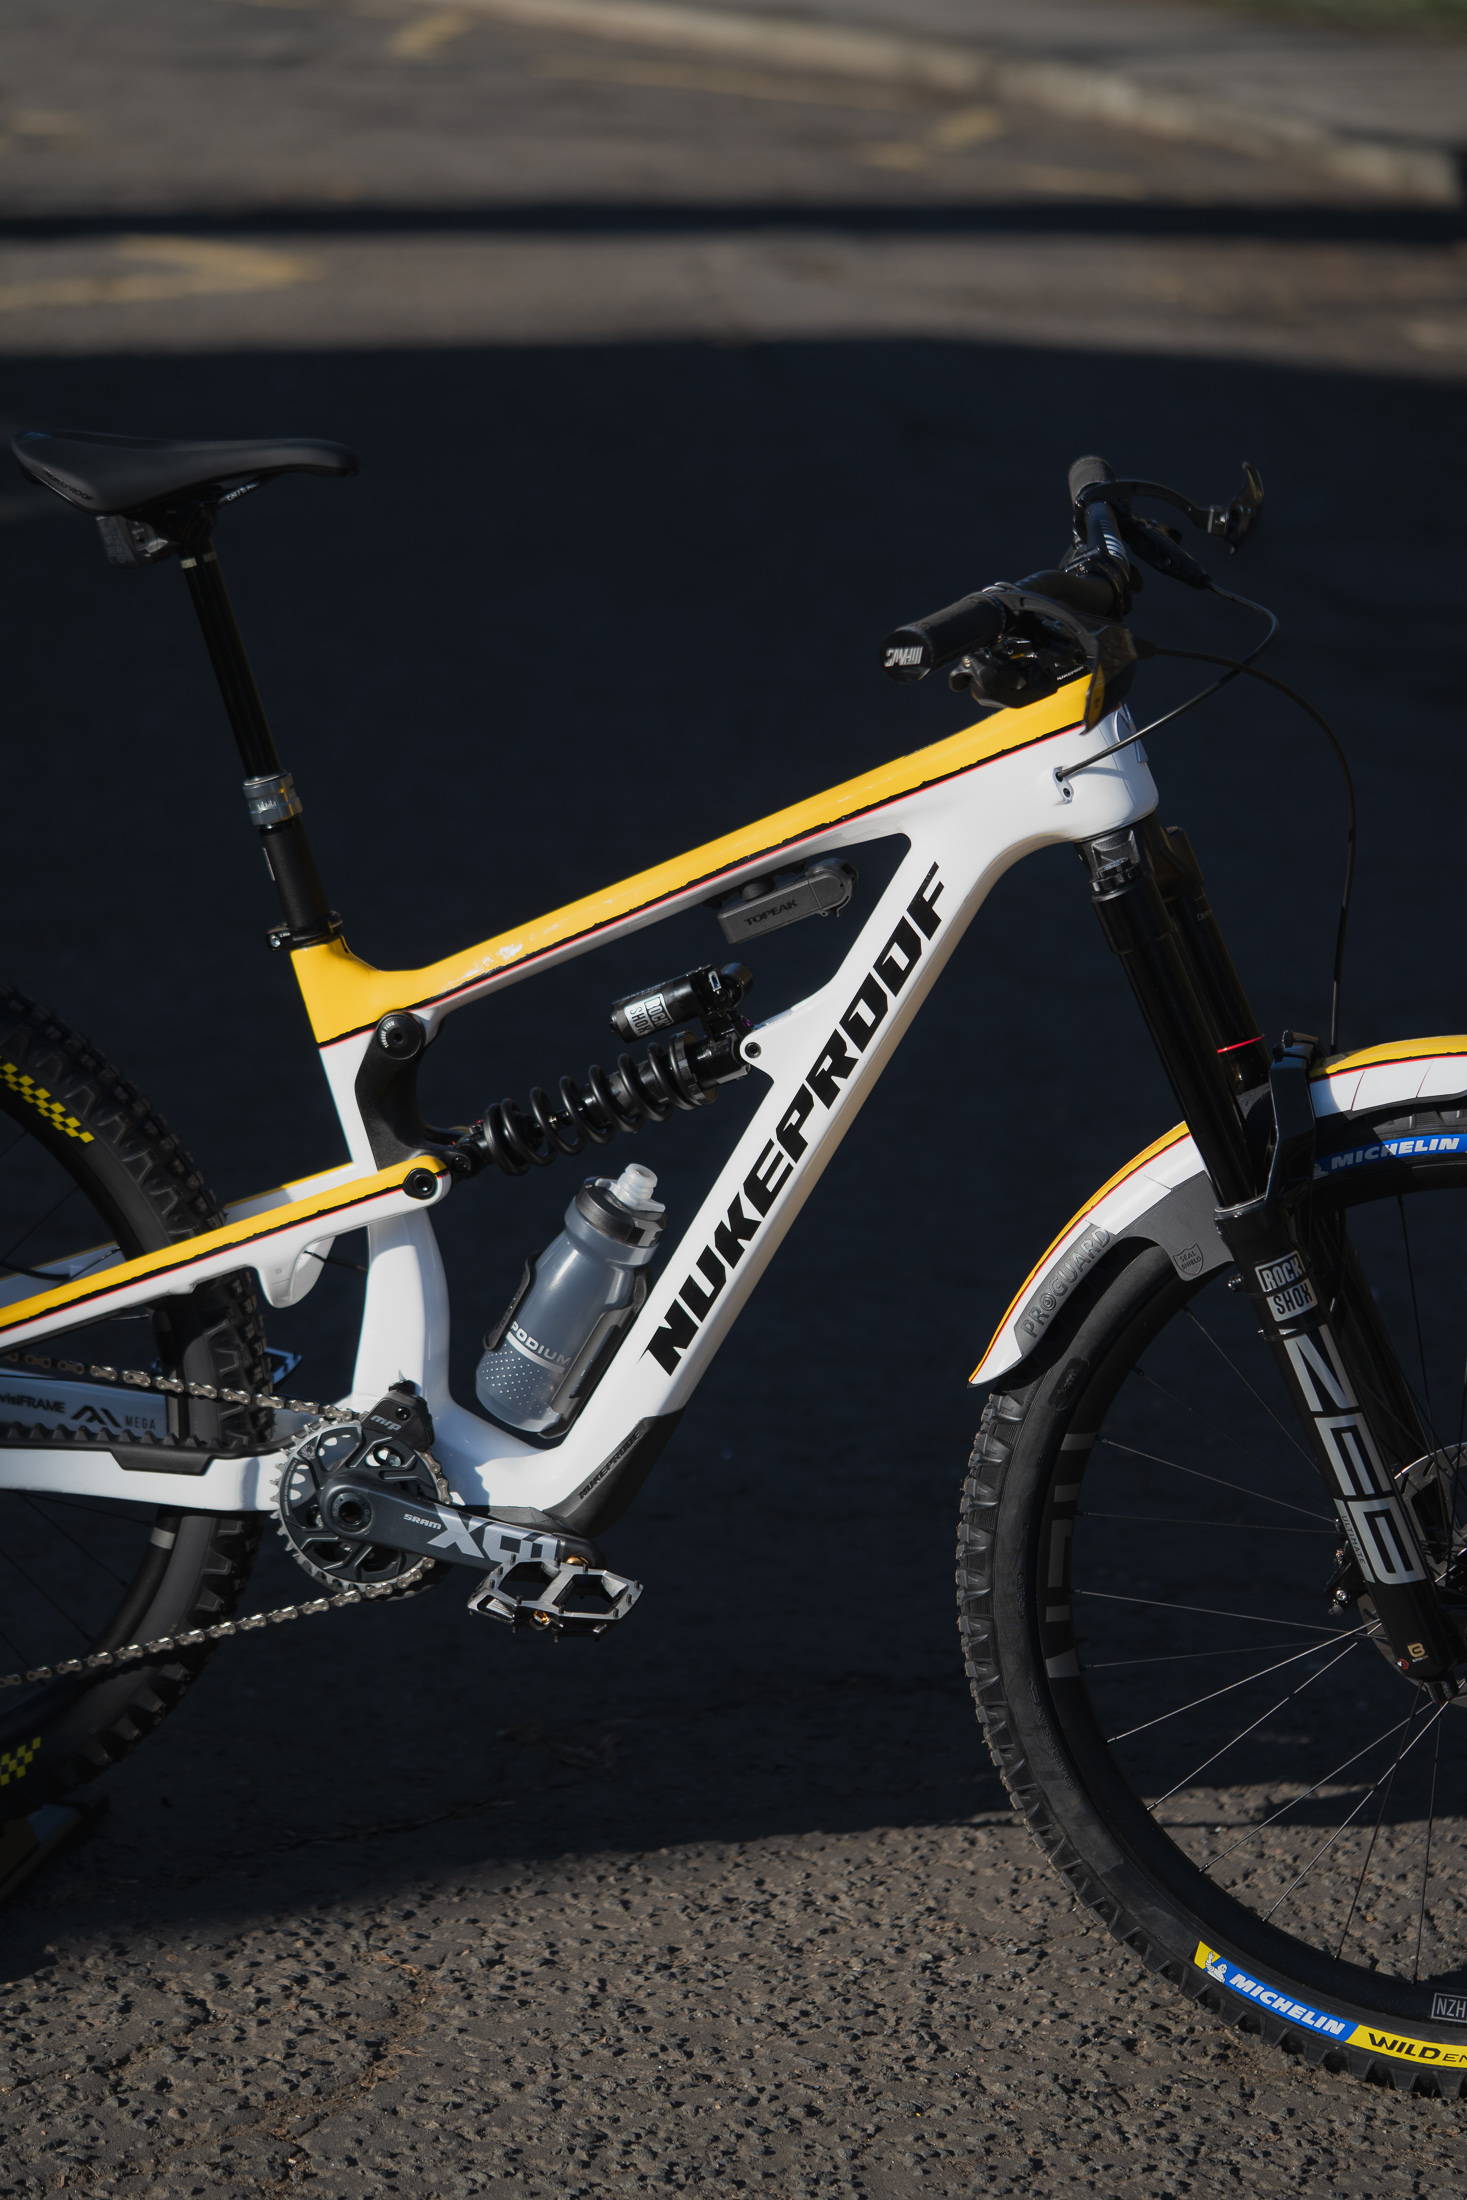 A closer look at the custom paint on the Nukeproof-SRAM team bikes